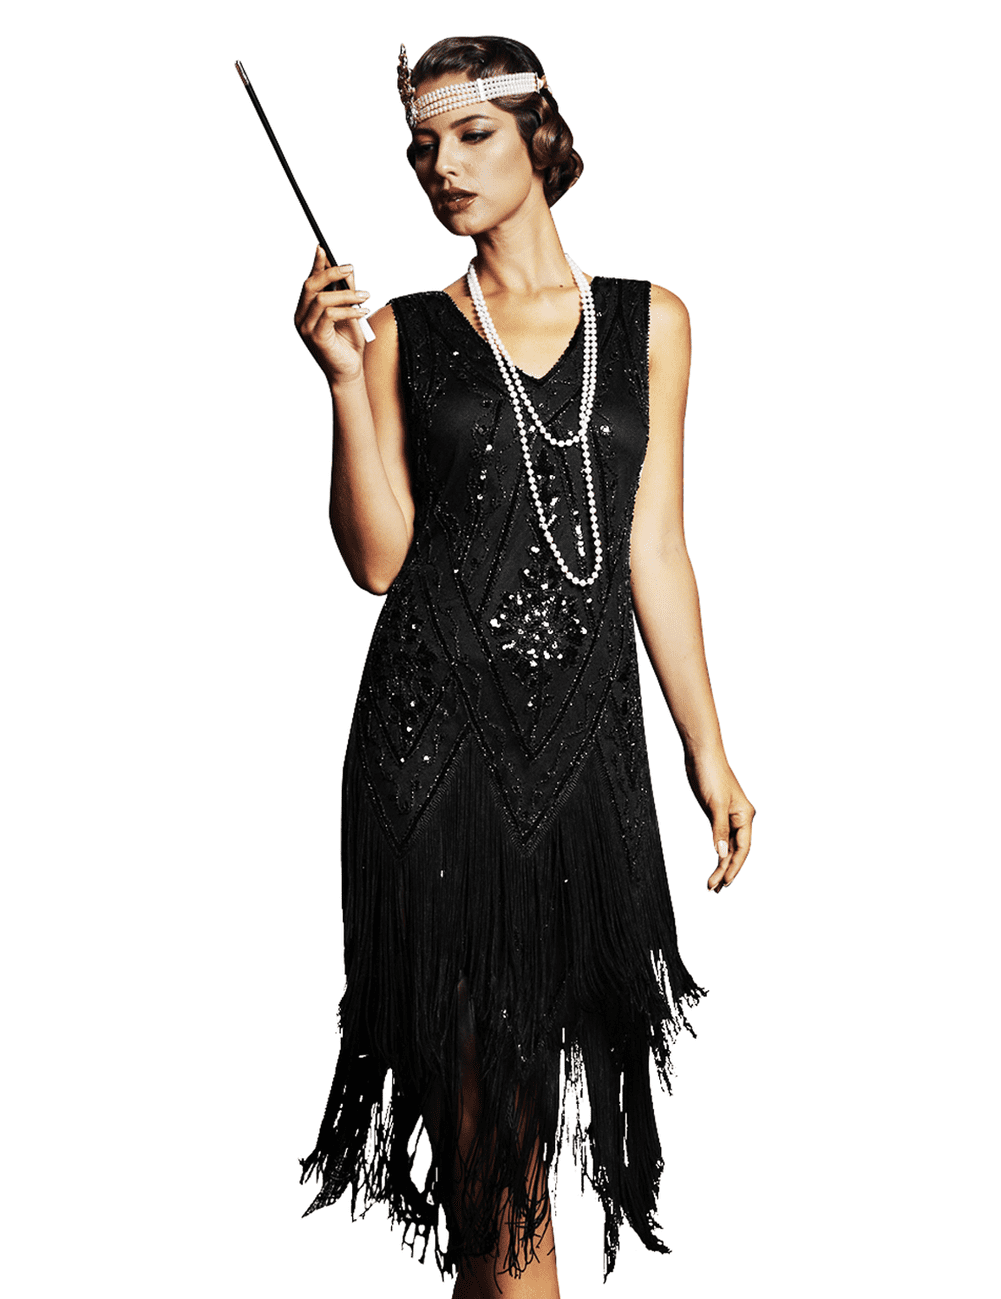 1920s dress